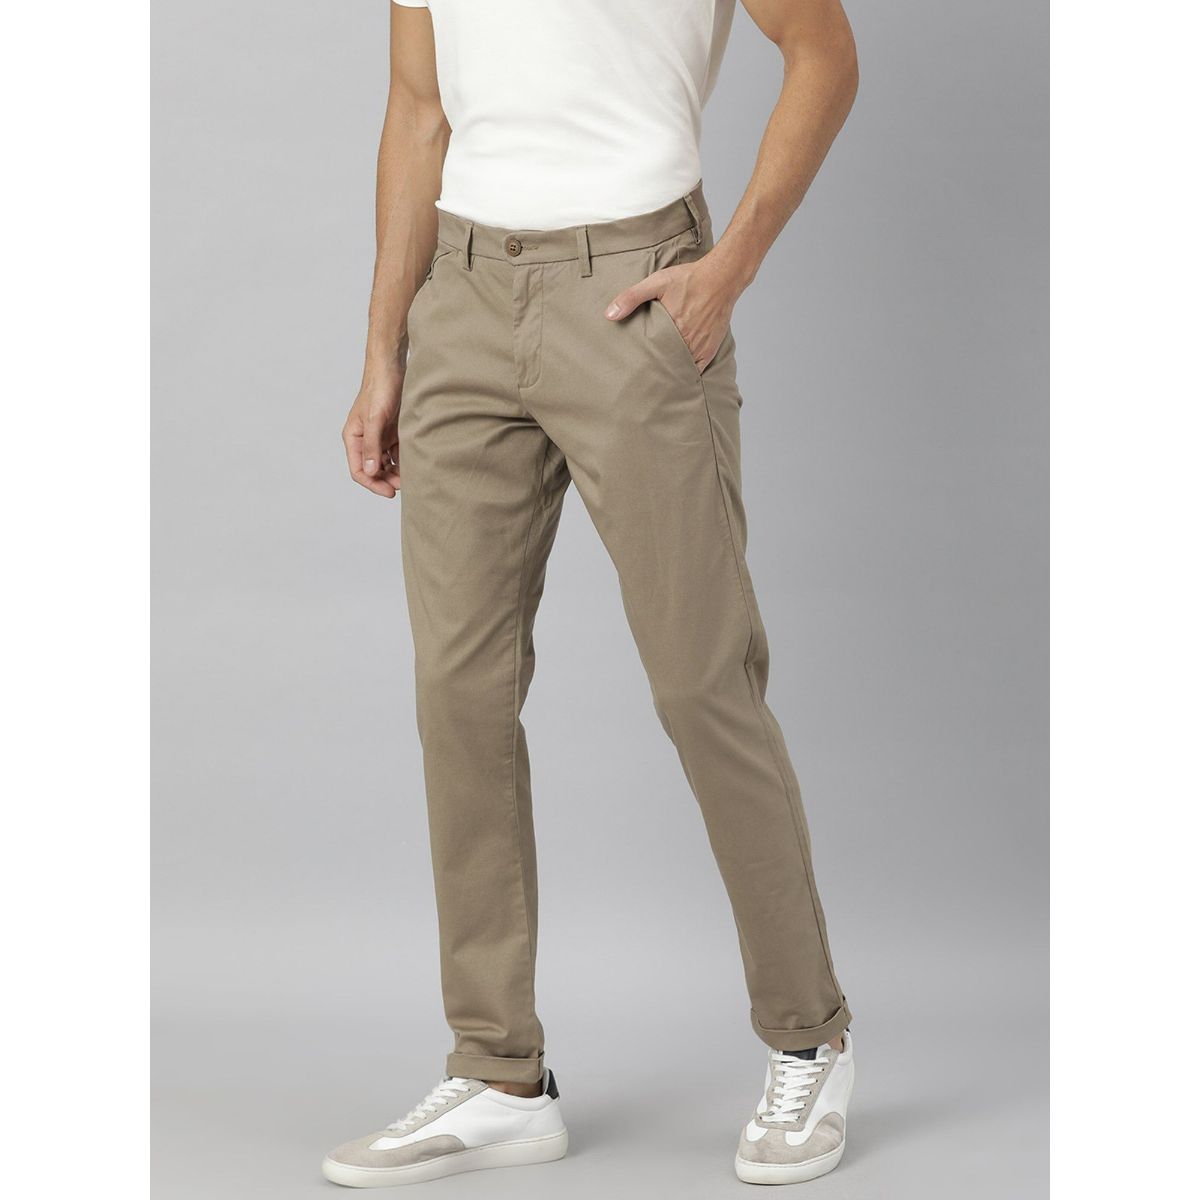 Jeans & Pants | Shirt & Chino Combo Rare Rabbit Shirt & Netplay Trouser  Combo Offer | Freeup